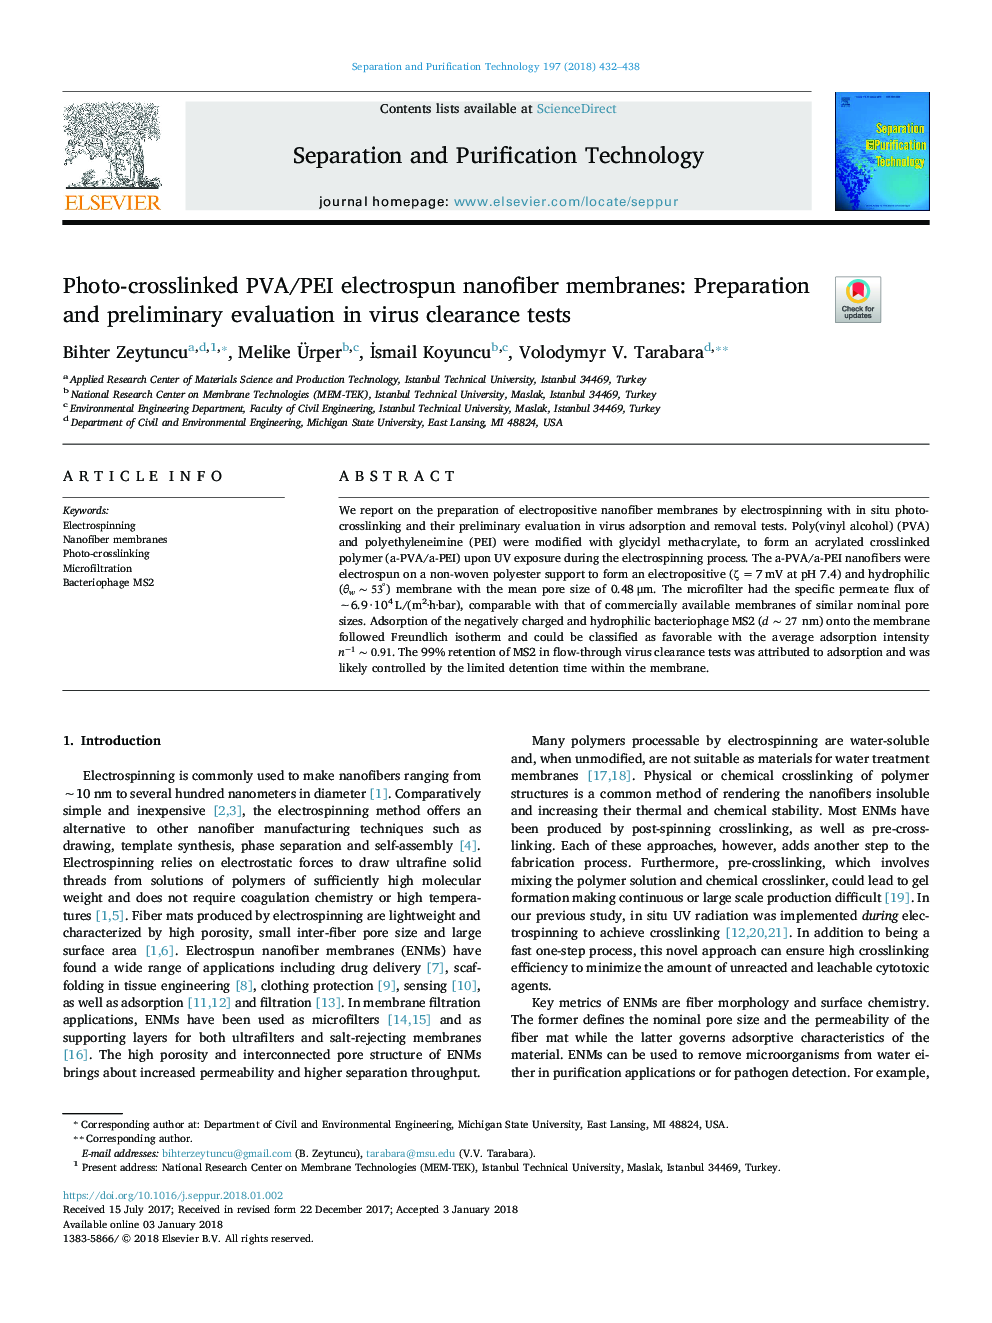 Photo-crosslinked PVA/PEI electrospun nanofiber membranes: Preparation and preliminary evaluation in virus clearance tests